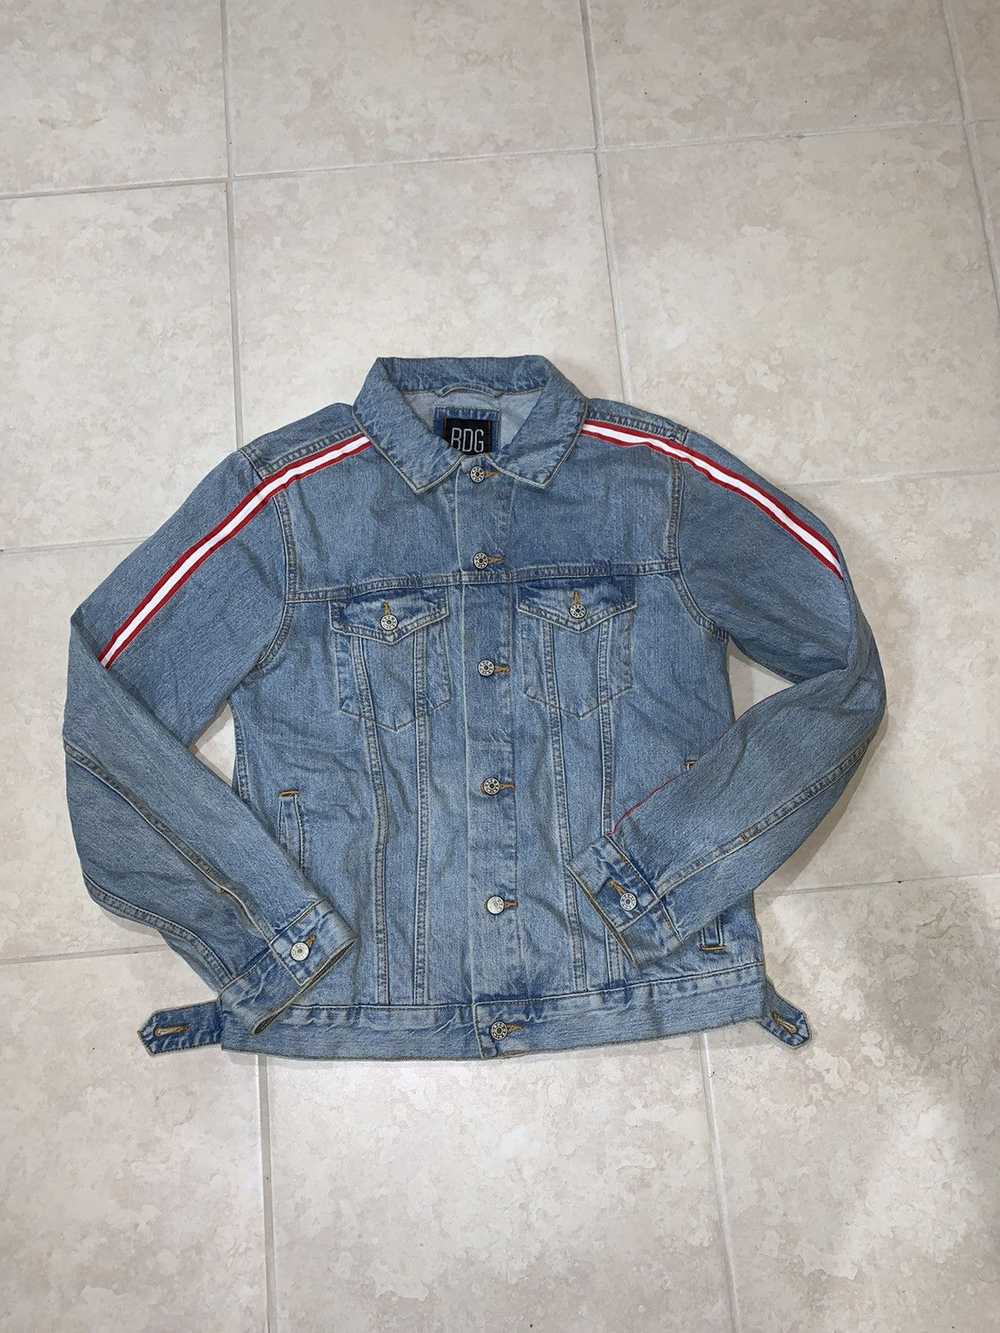 Bdg × Urban Outfitters BDG Pinstripe Denim Jacket - image 1